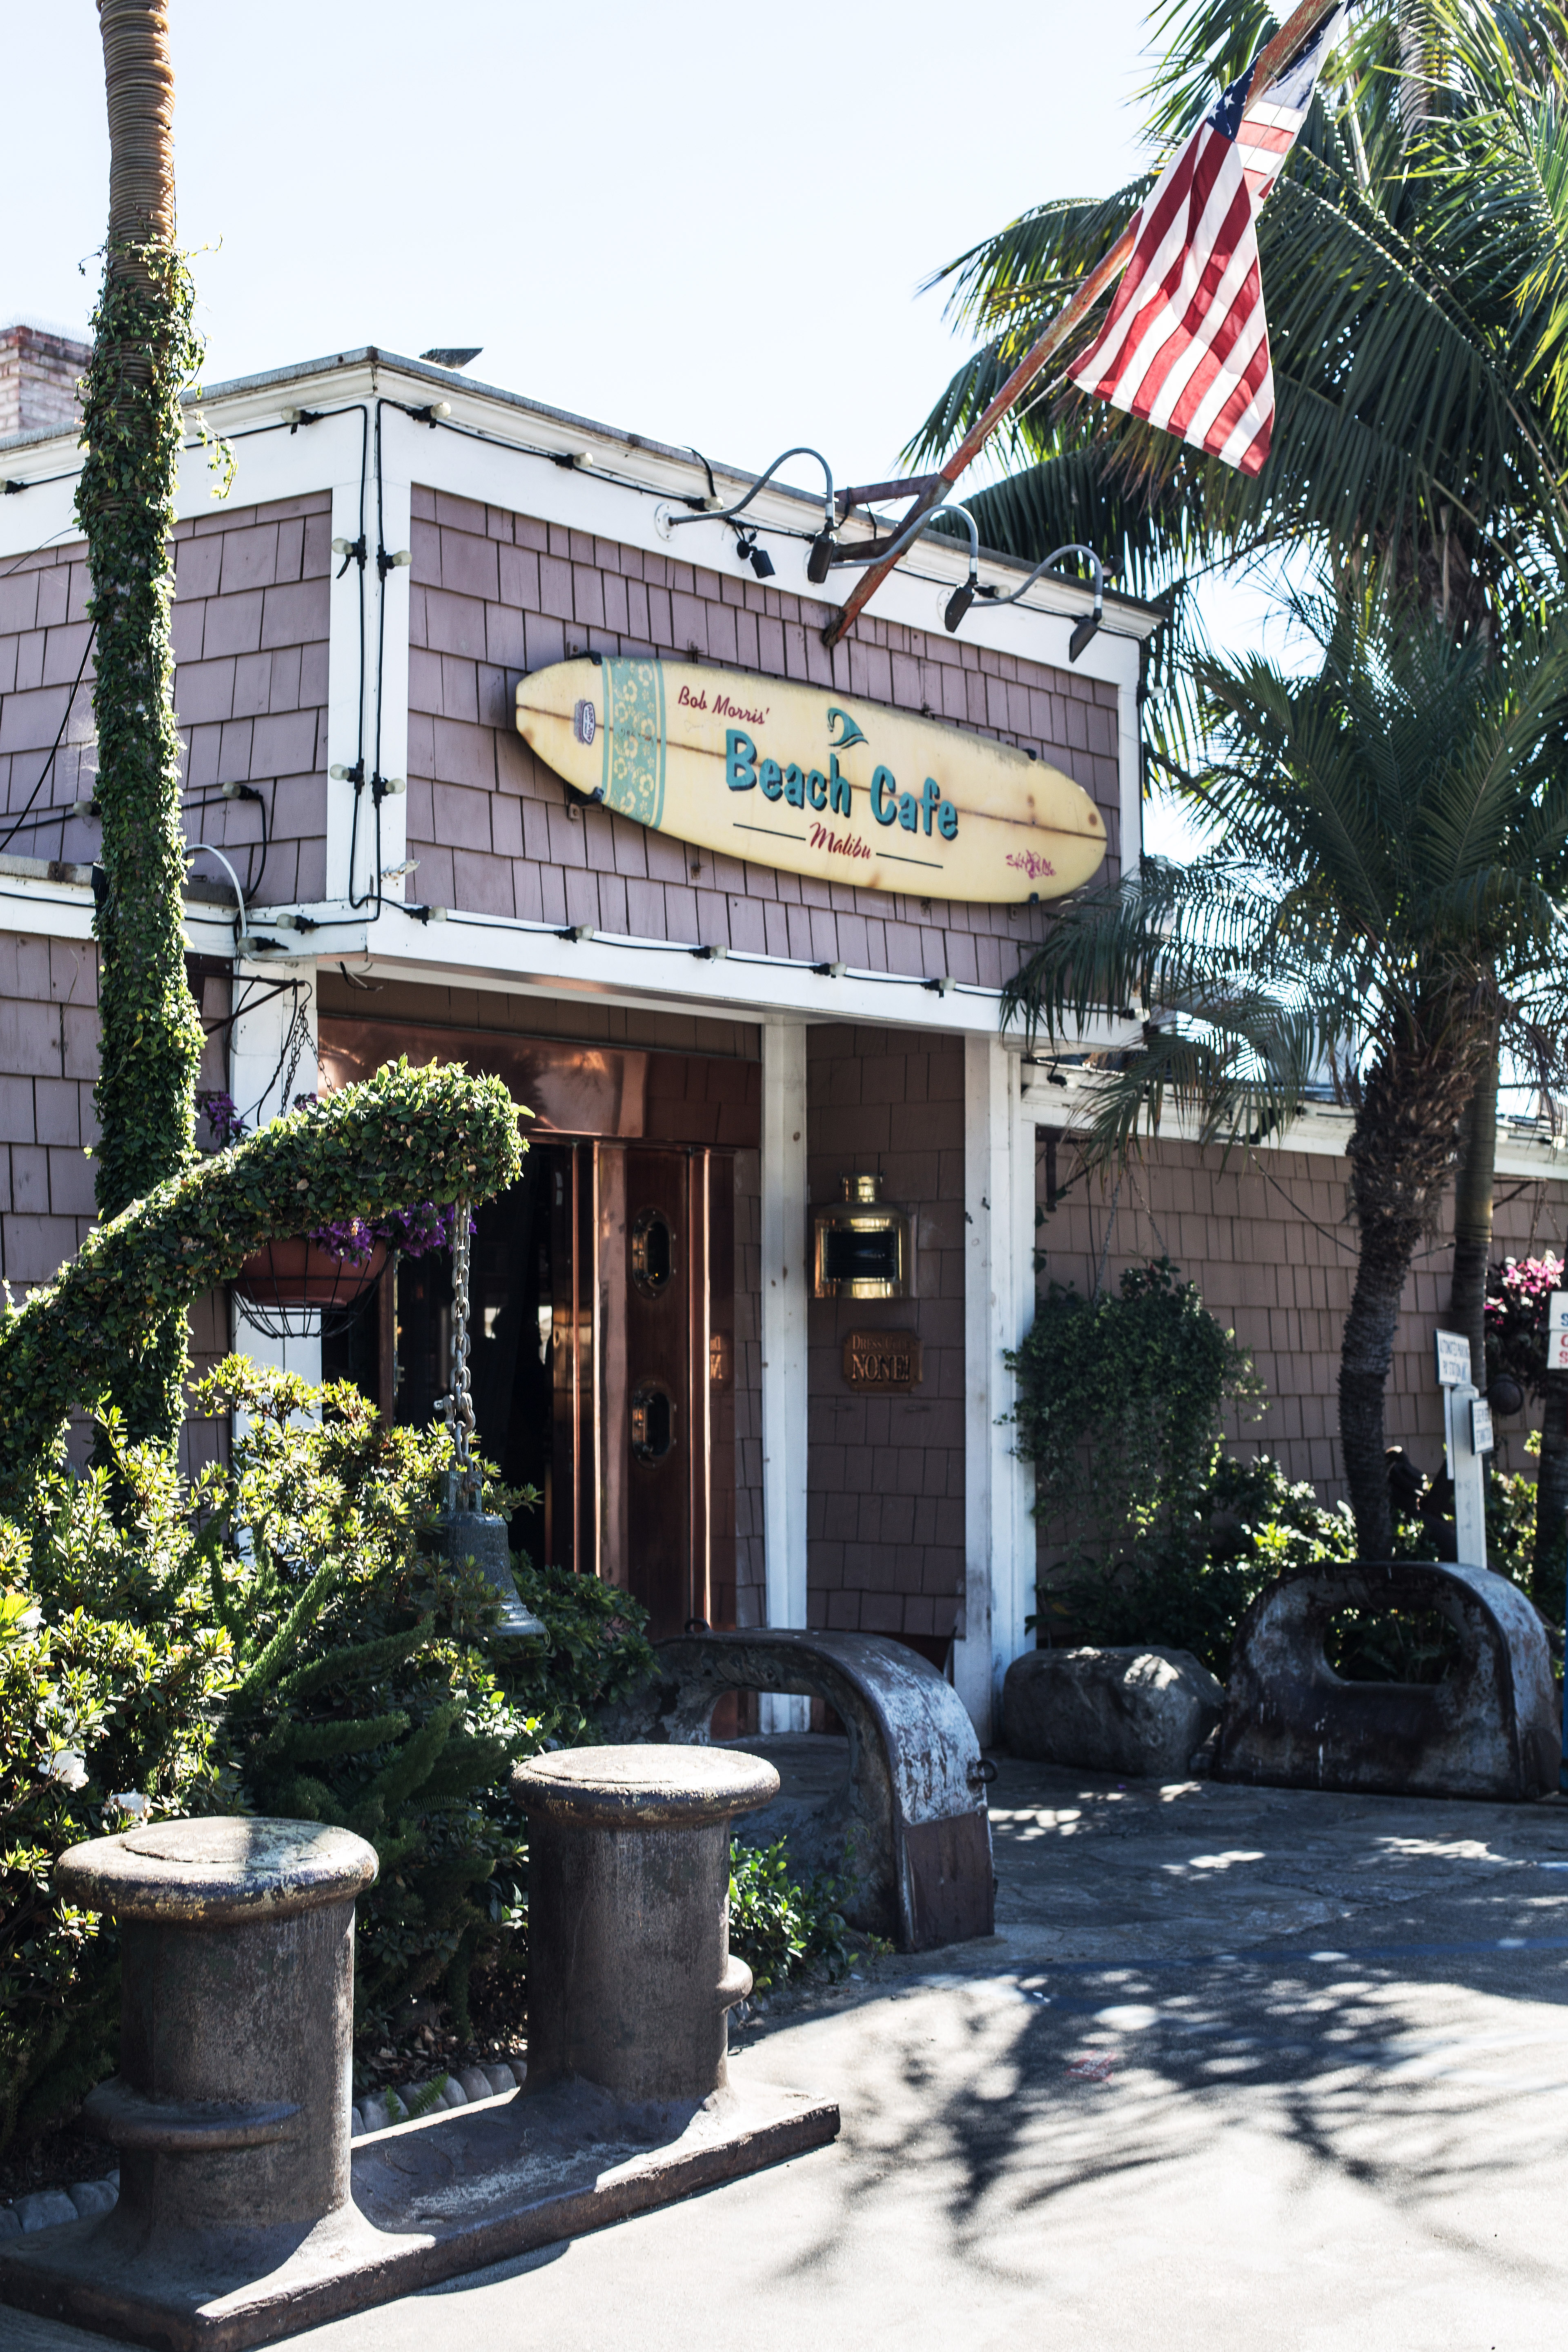 Paradise-Cove-Beach-Cafe-Malibu-1 Visiting Malibu and Paradise Beach Cove Cafe